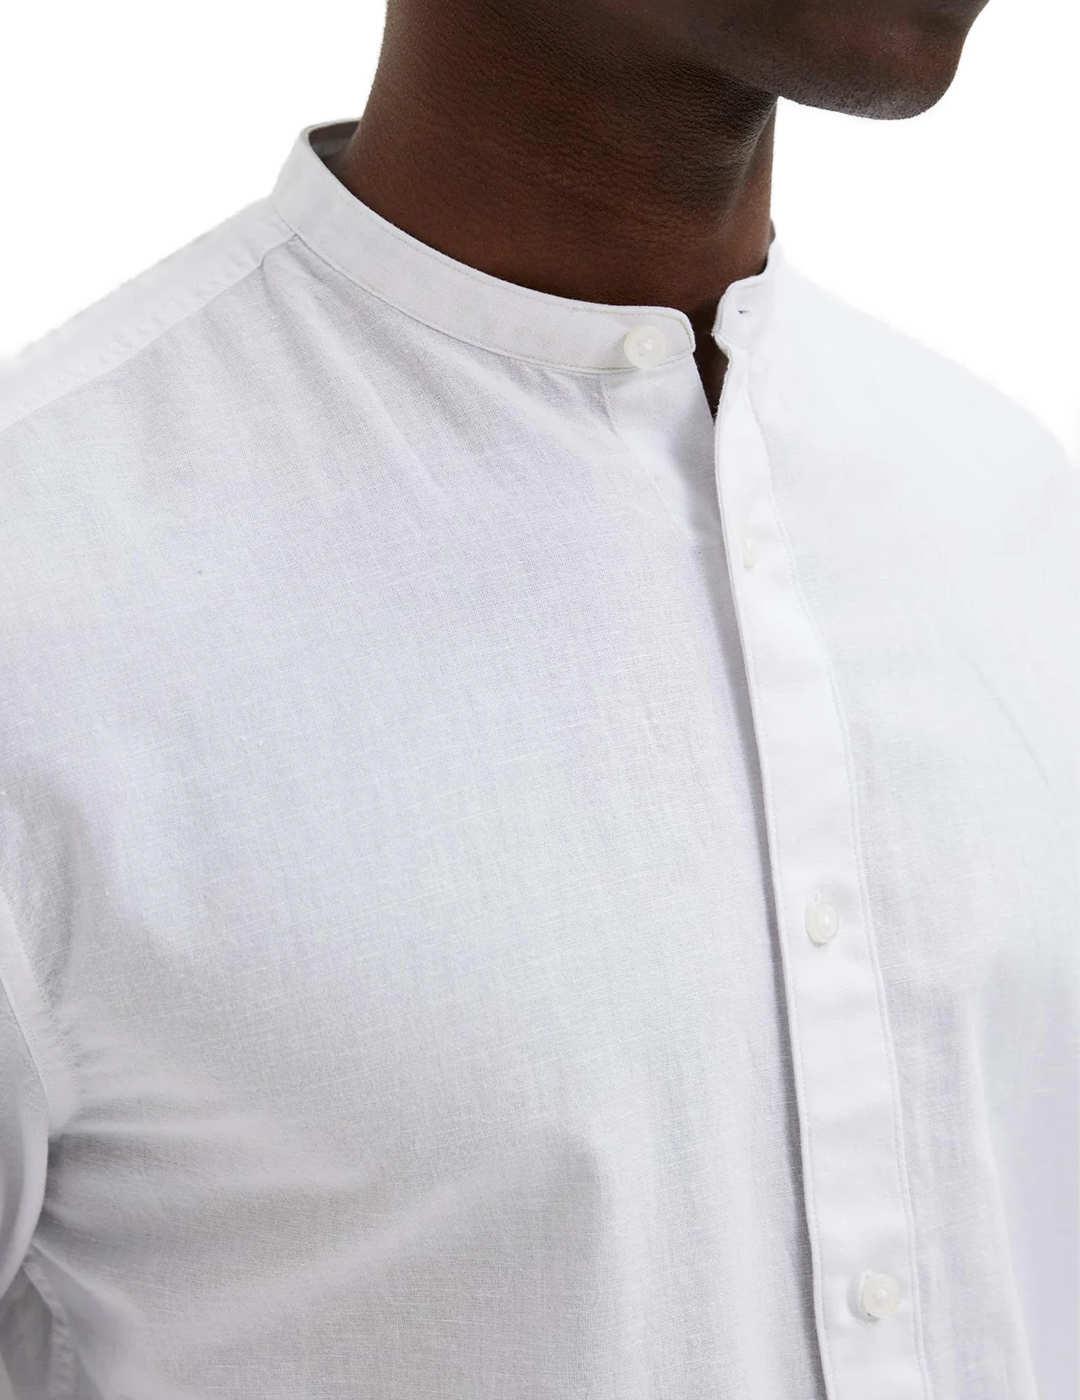 Camisa Selected Regnew lino blanca manga larga para hombre